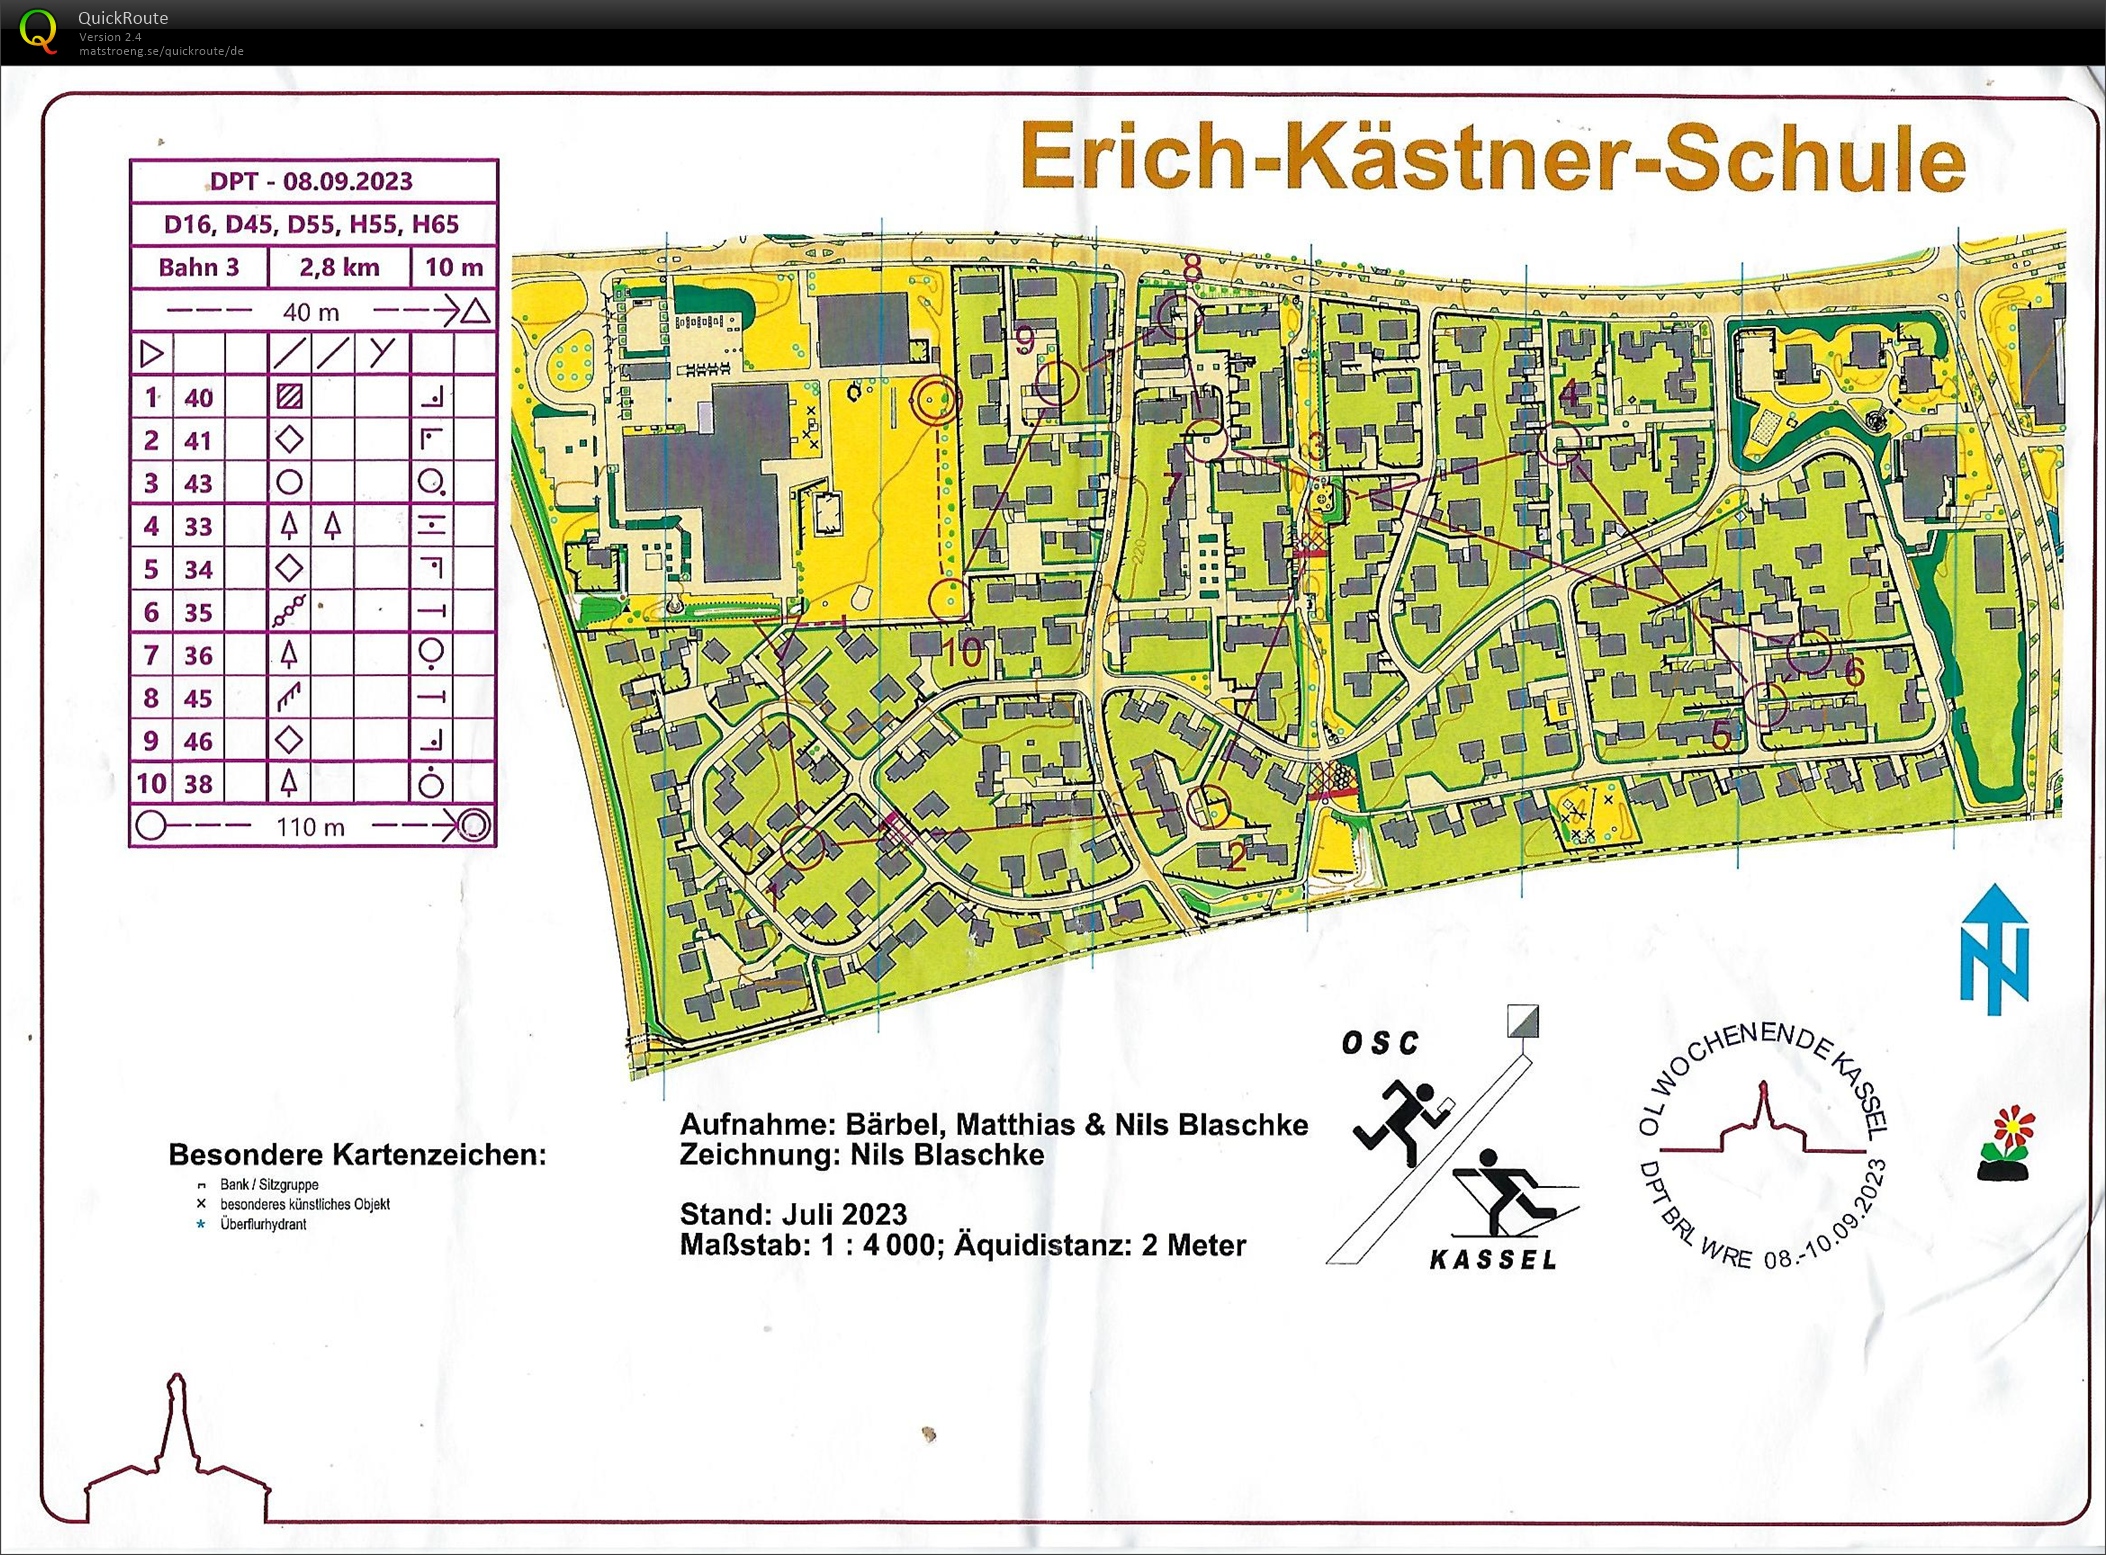 DPT Sprint-OL Kassel (08/09/2023)